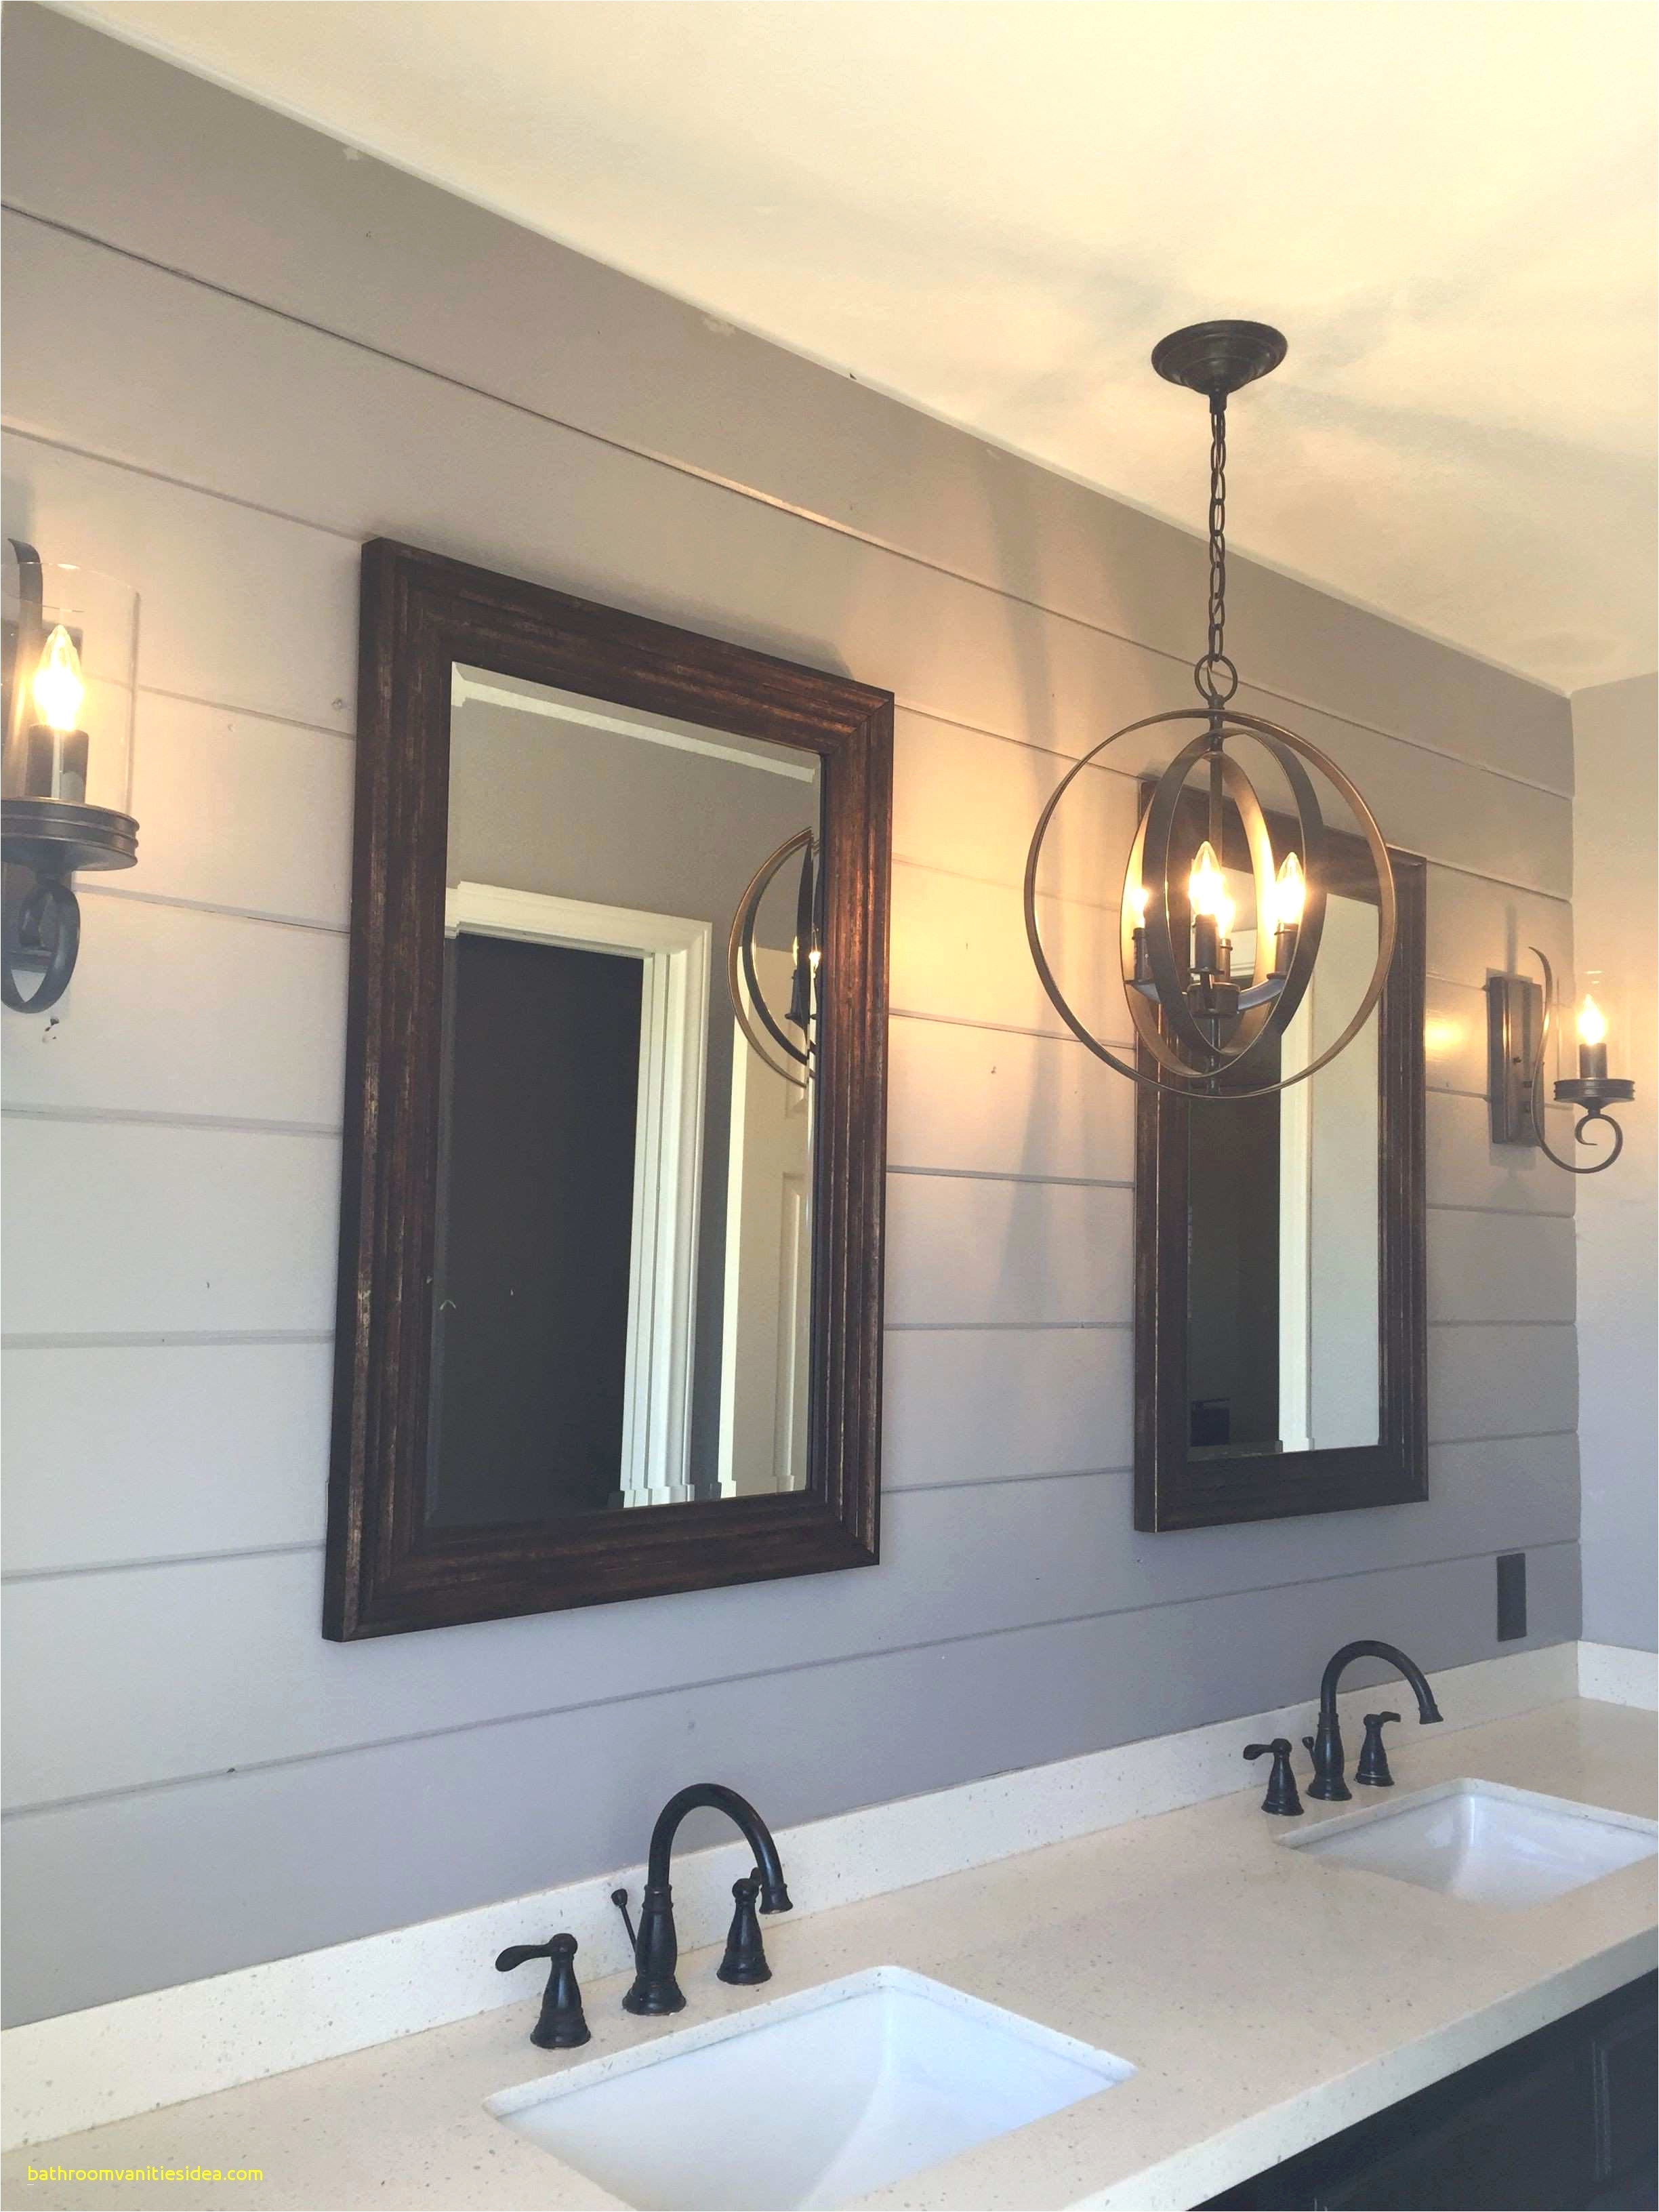 diy bathroom lighting bathroom vanity mirror inspirational diy light luxury h sink install i 0d